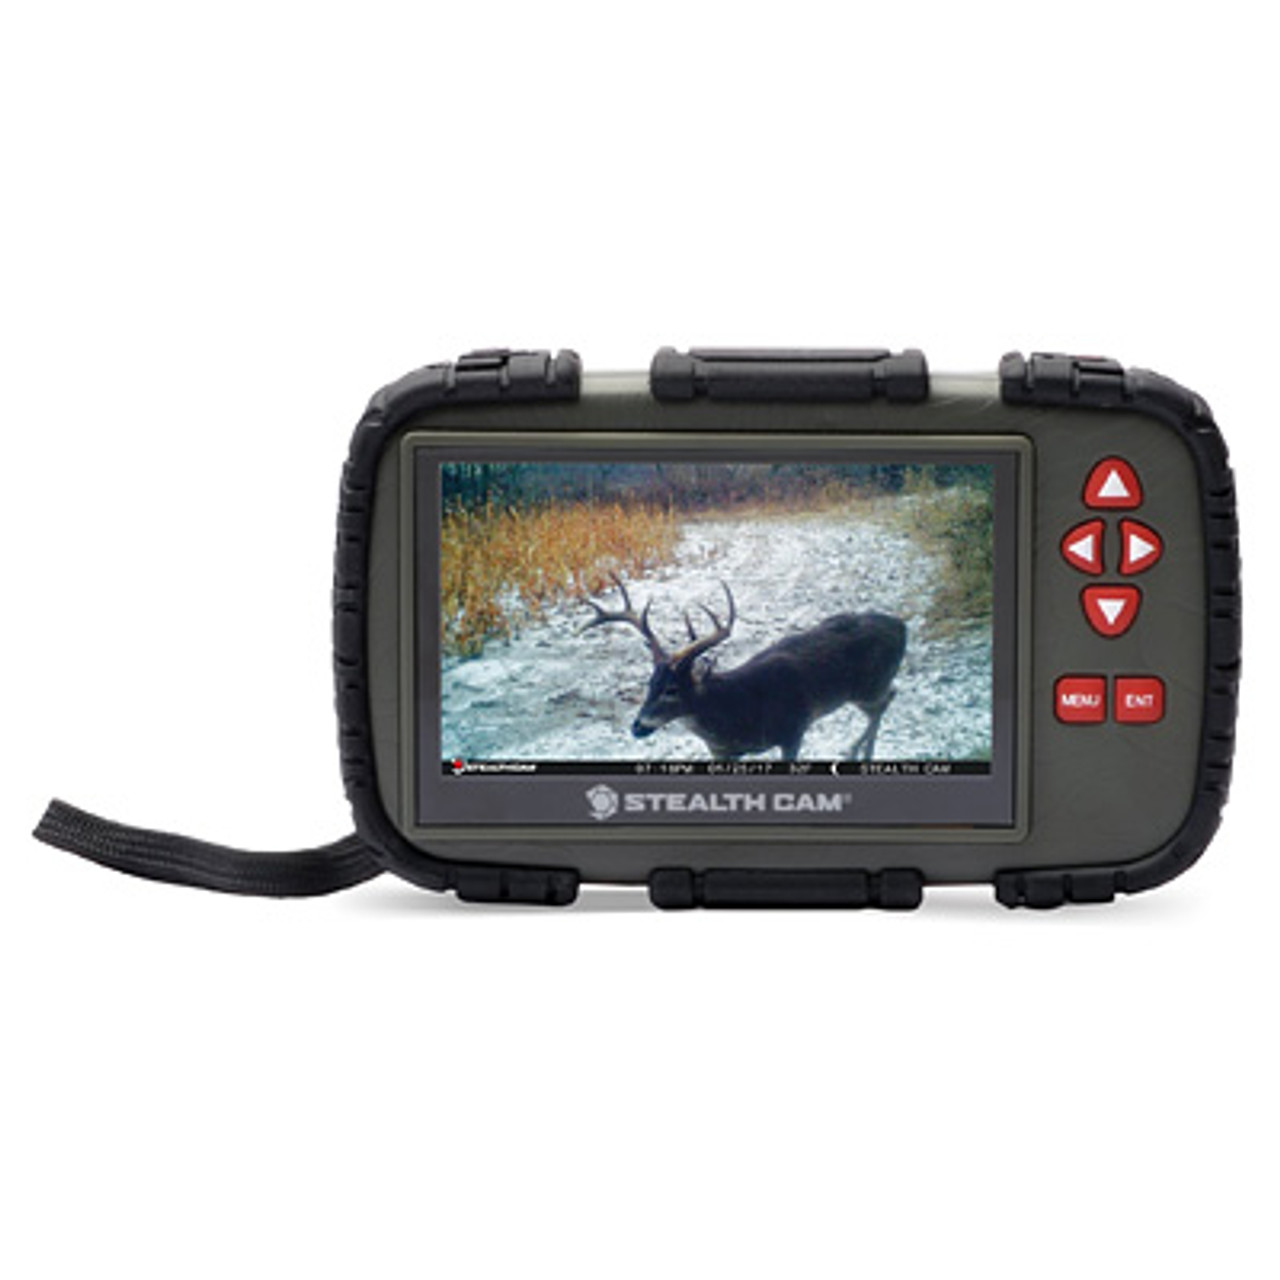 Stealth Cam CRV43X Touch Screen SD Card Viewer/Reader